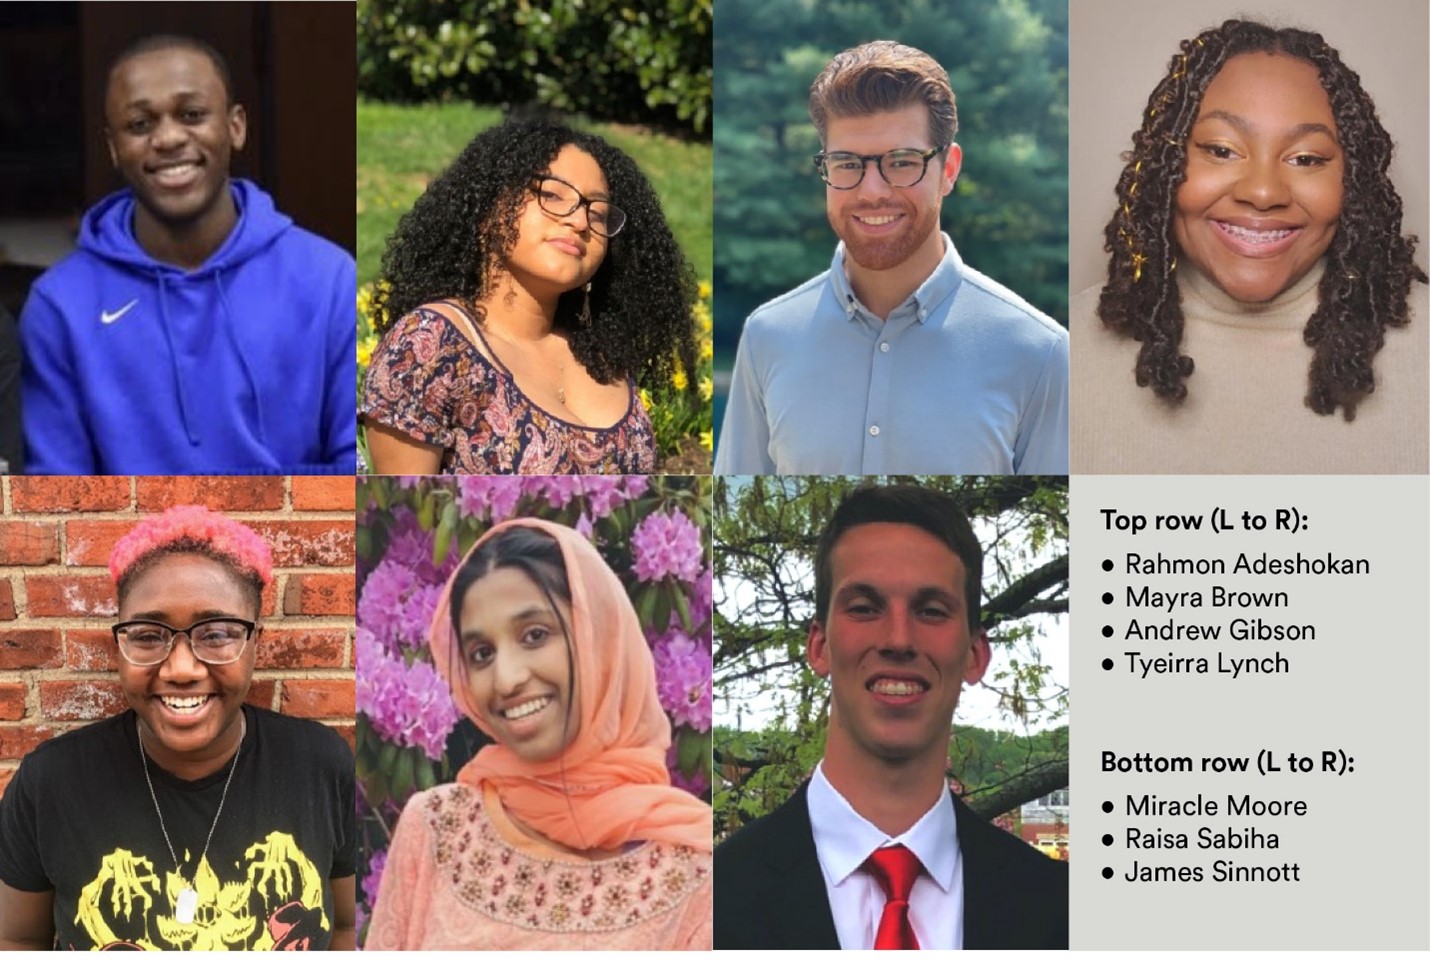 Photo: grid of 7 multi-ethnic, mix-gender students. Top row: Rahmon Adeshokan, Mayra Brown, Andrew Gibson, Tyeirra Lynch. Bottom row: Miricle Moore, Raisa Sabiha, James Sinnott.